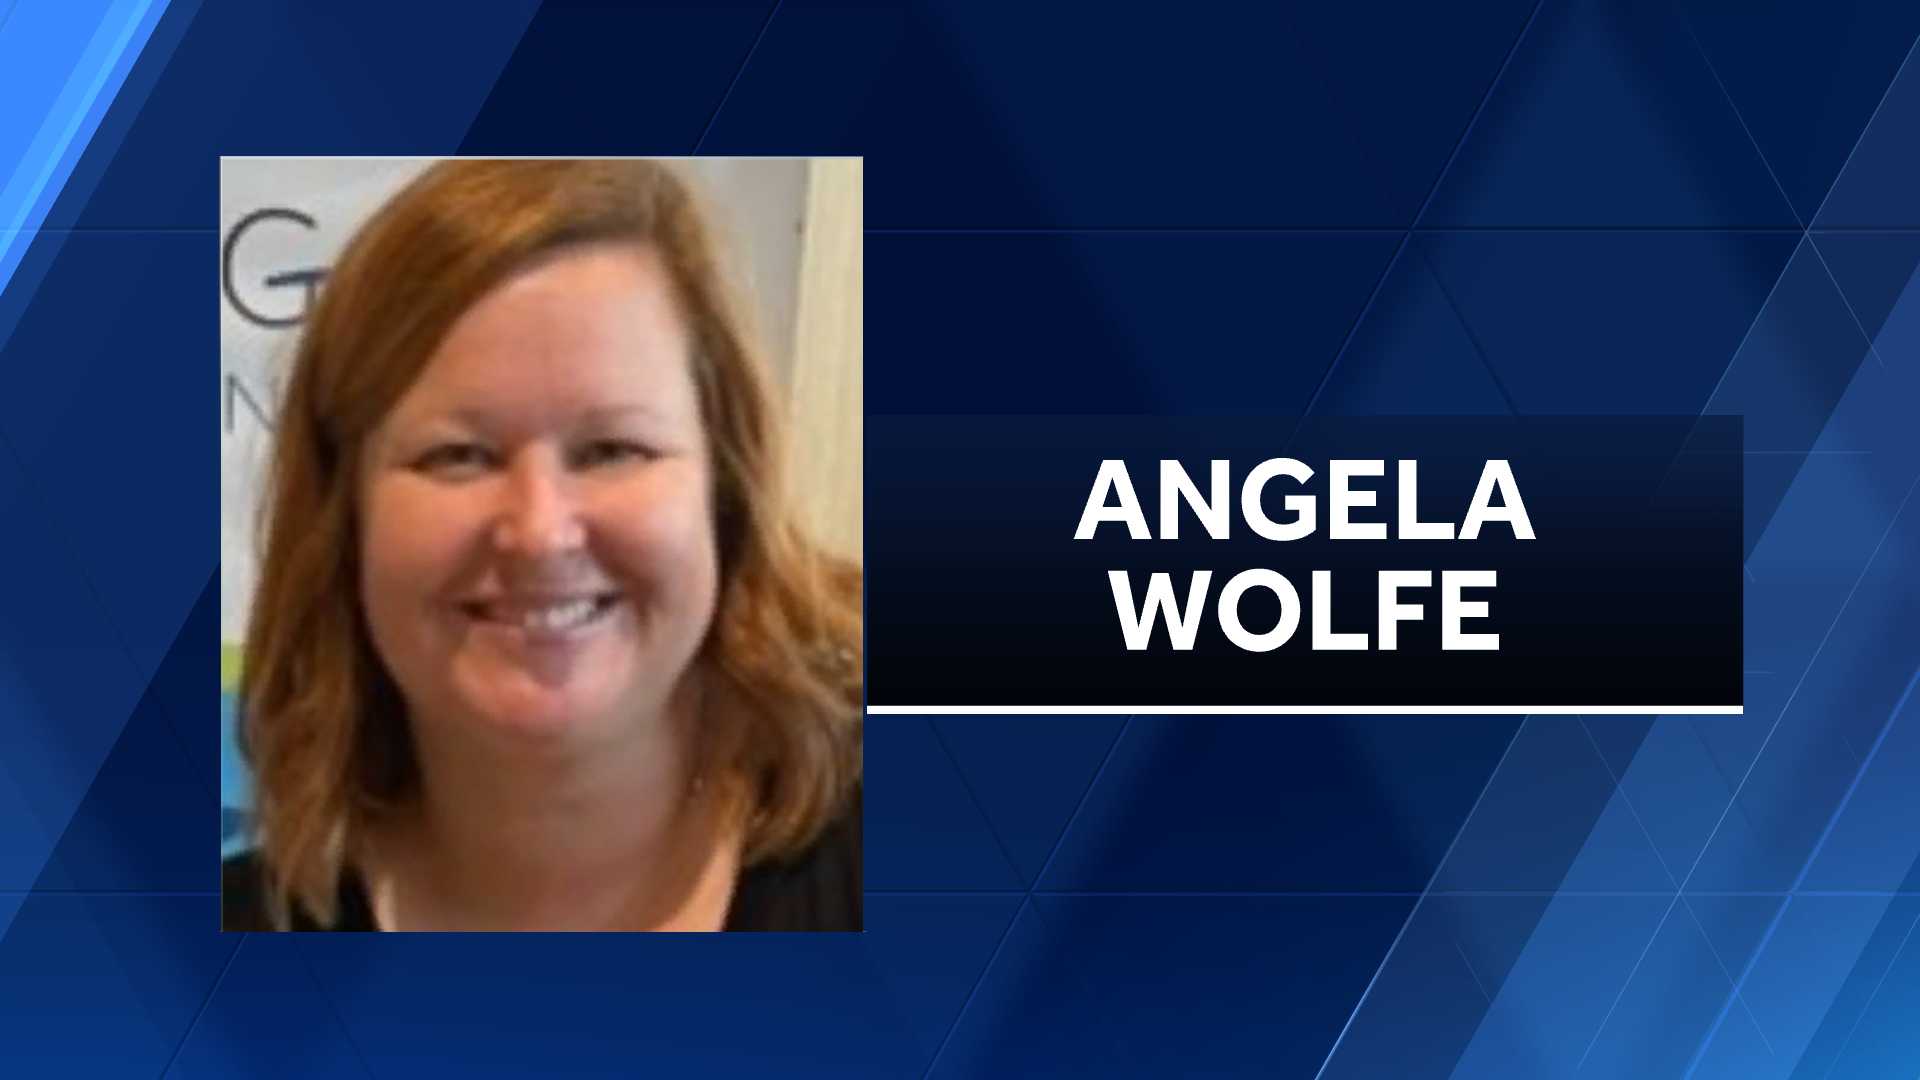 Omaha high school teacher under investigation for embezzling from student press association